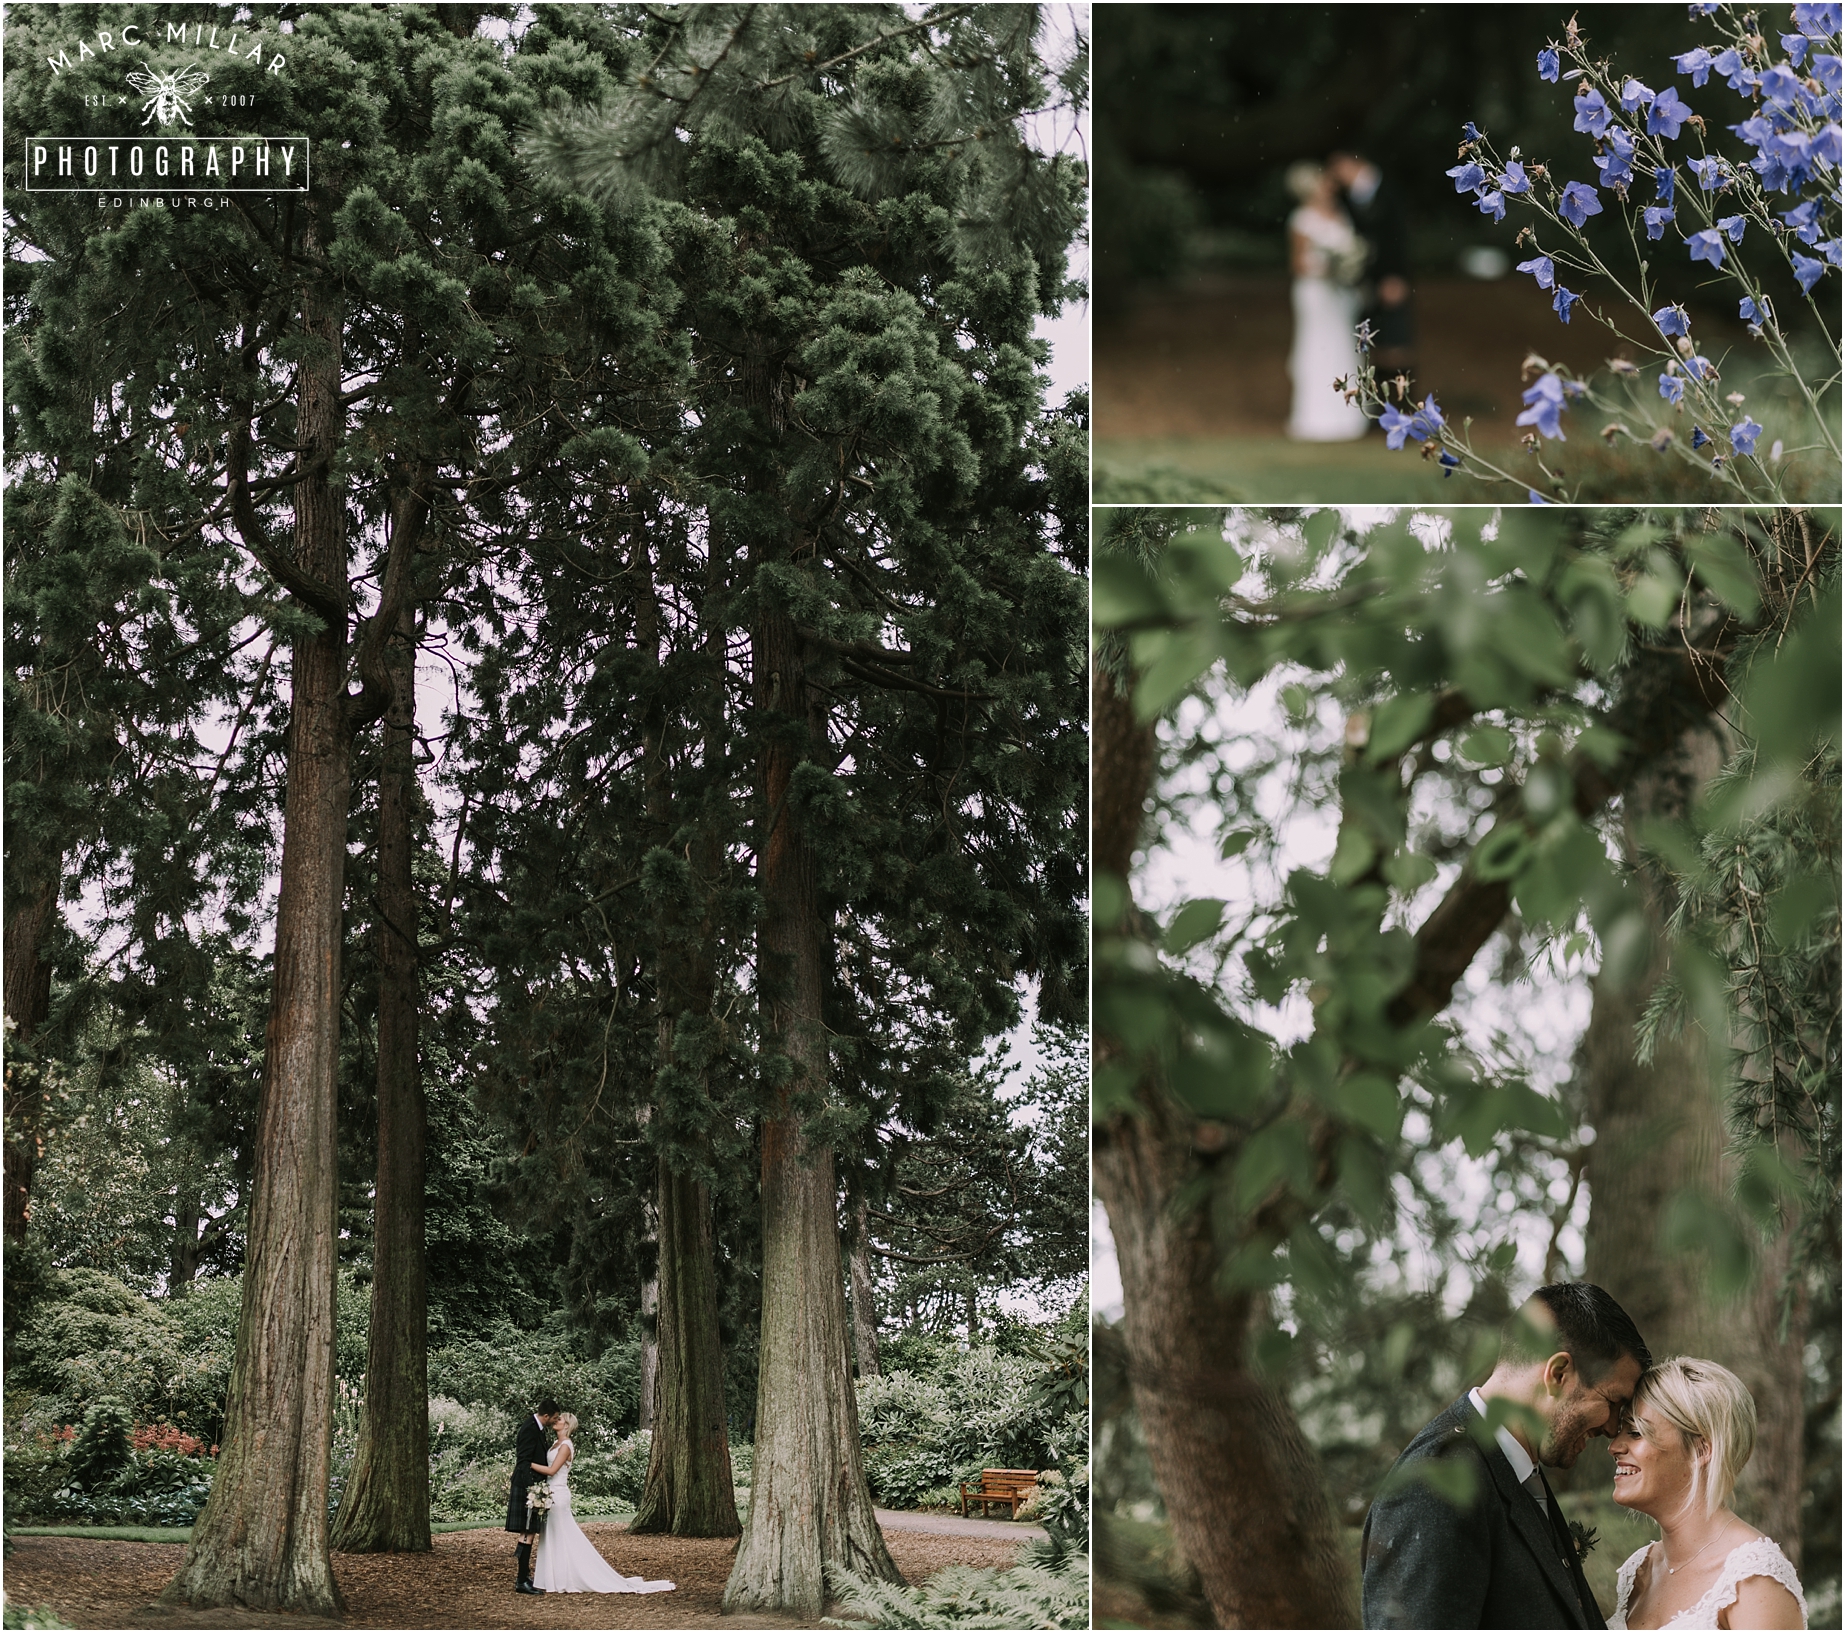  Royal Botanic Gardens Edinburgh Pre Wedding Shoot by Marc Millar Photography 